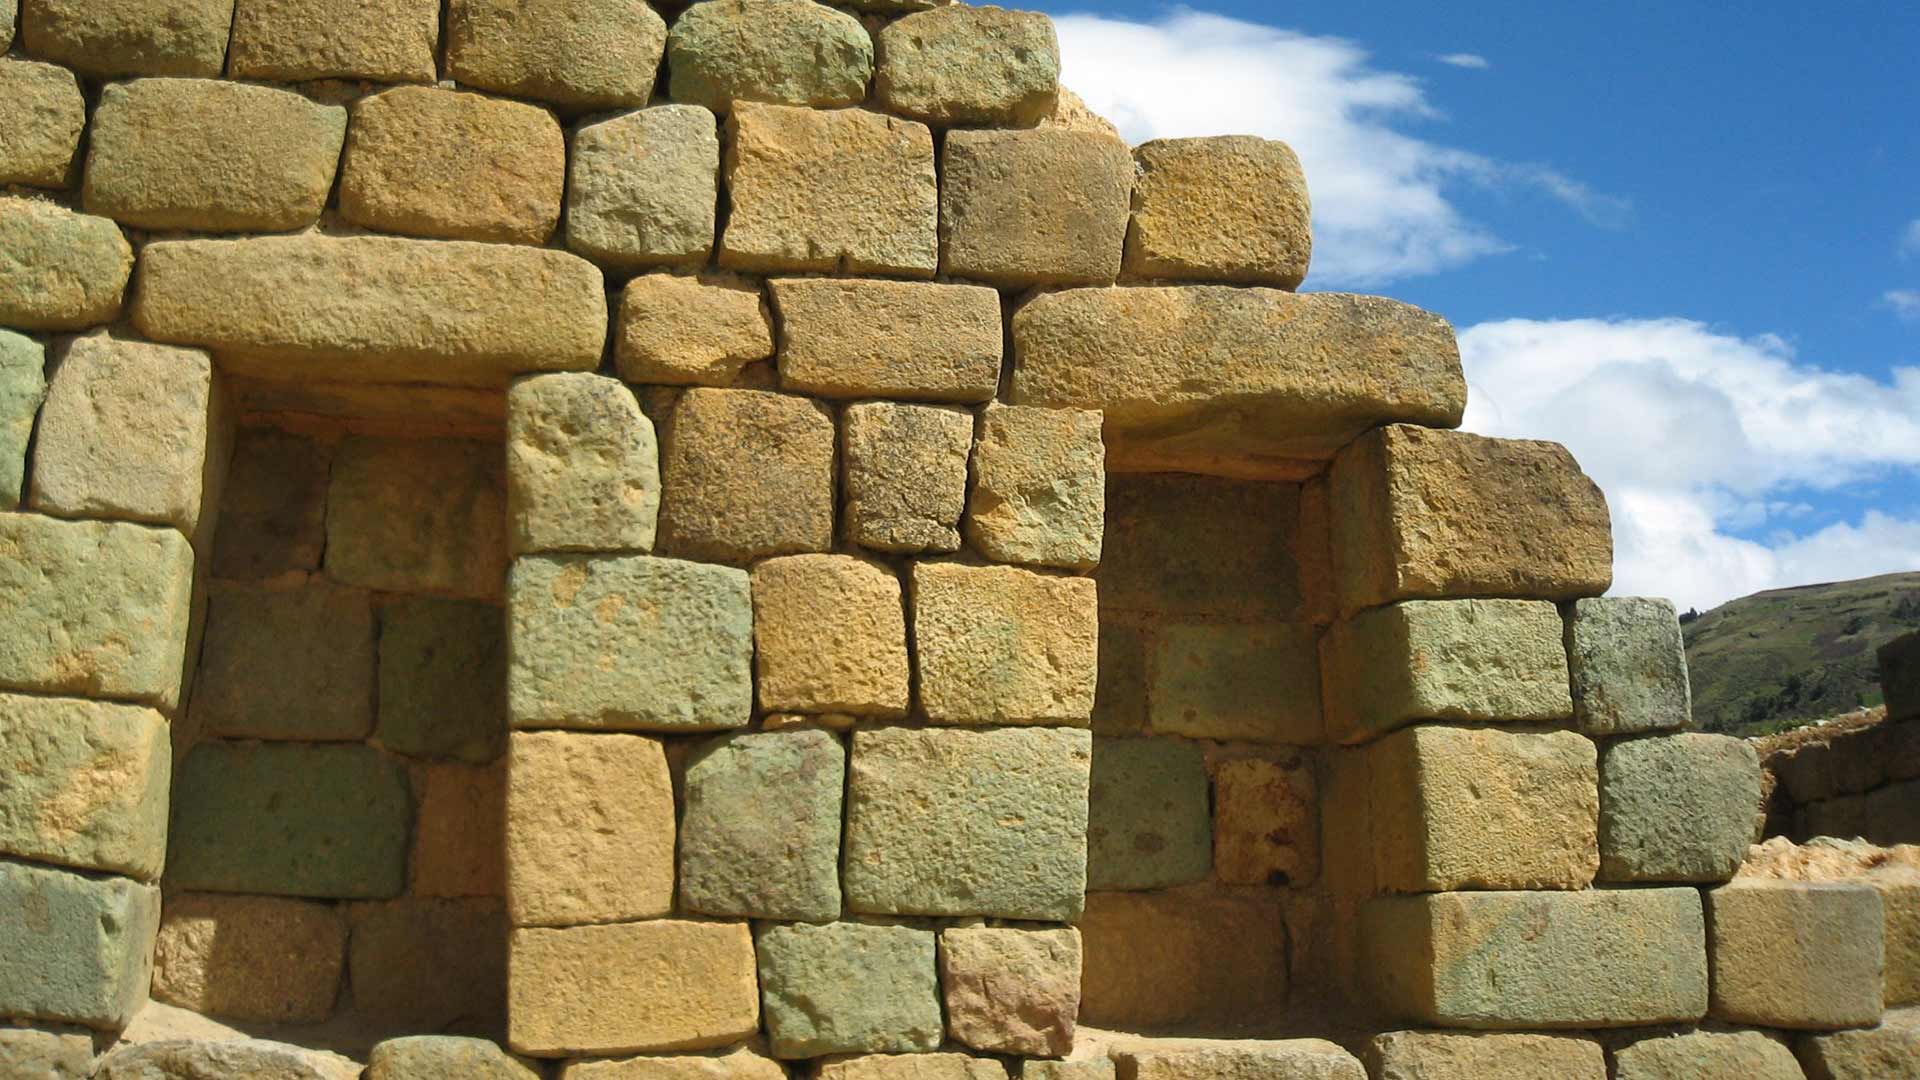 Impressive Inca stoneworks at Ingapirca, Ecuador on our Trip from Baños to Cuenca with Impactful Travel